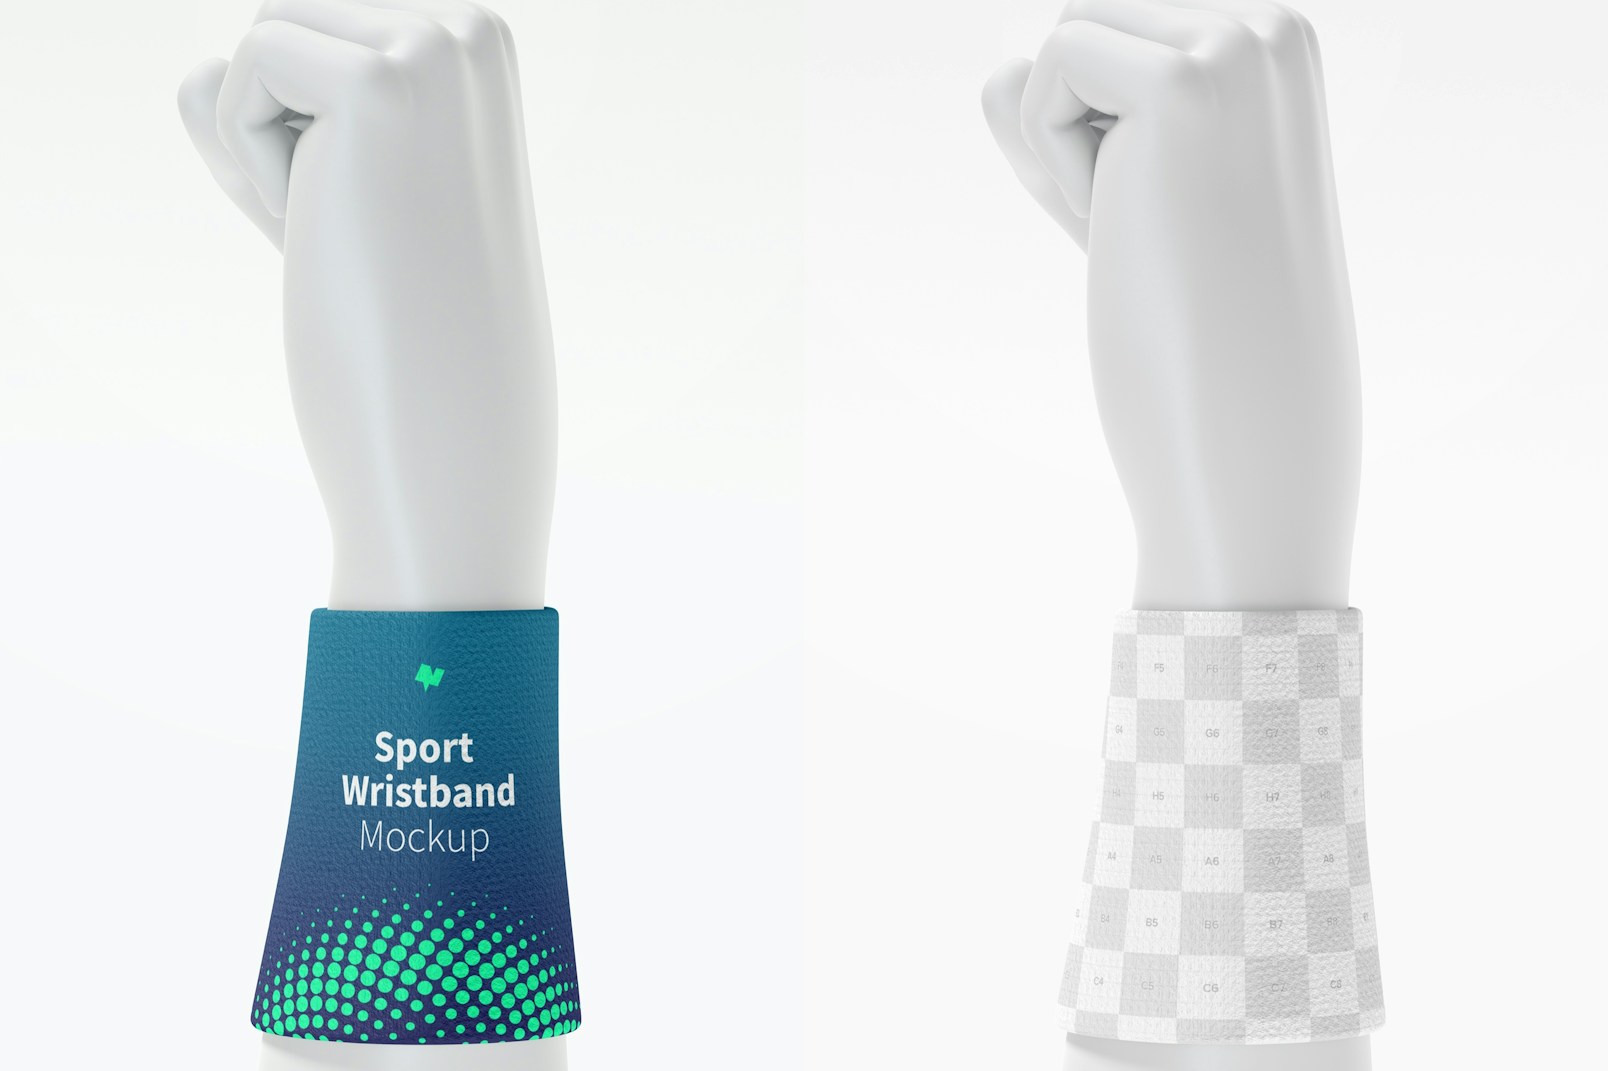 Sport Wristband with Hand Mockup